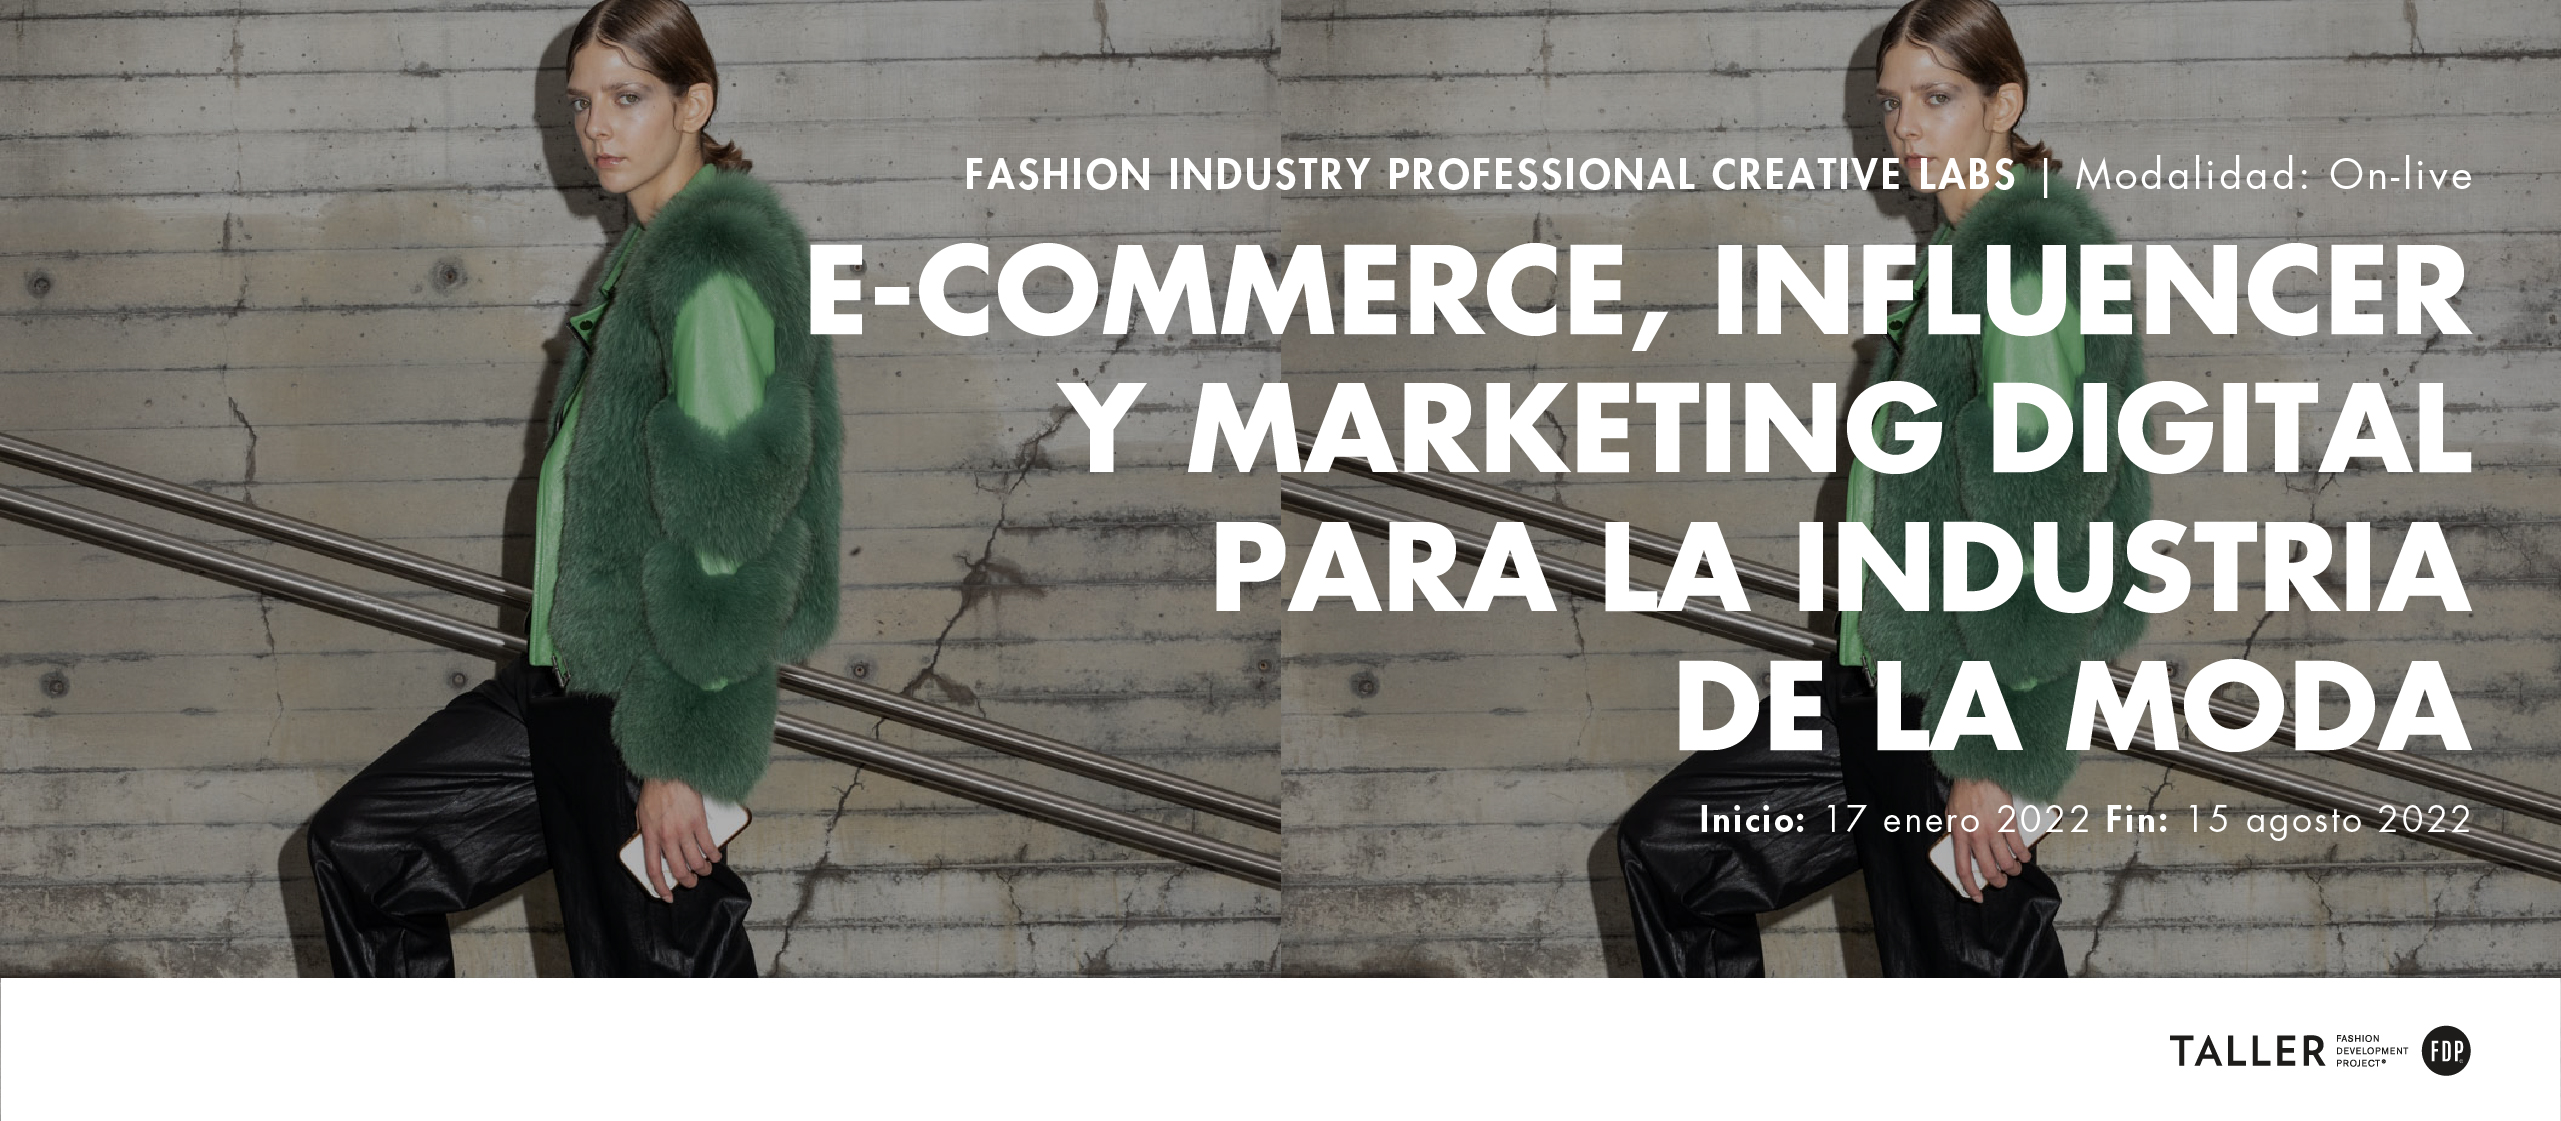 Inicio Creative Lab On-live: E-commerce, influencer y marketing digital